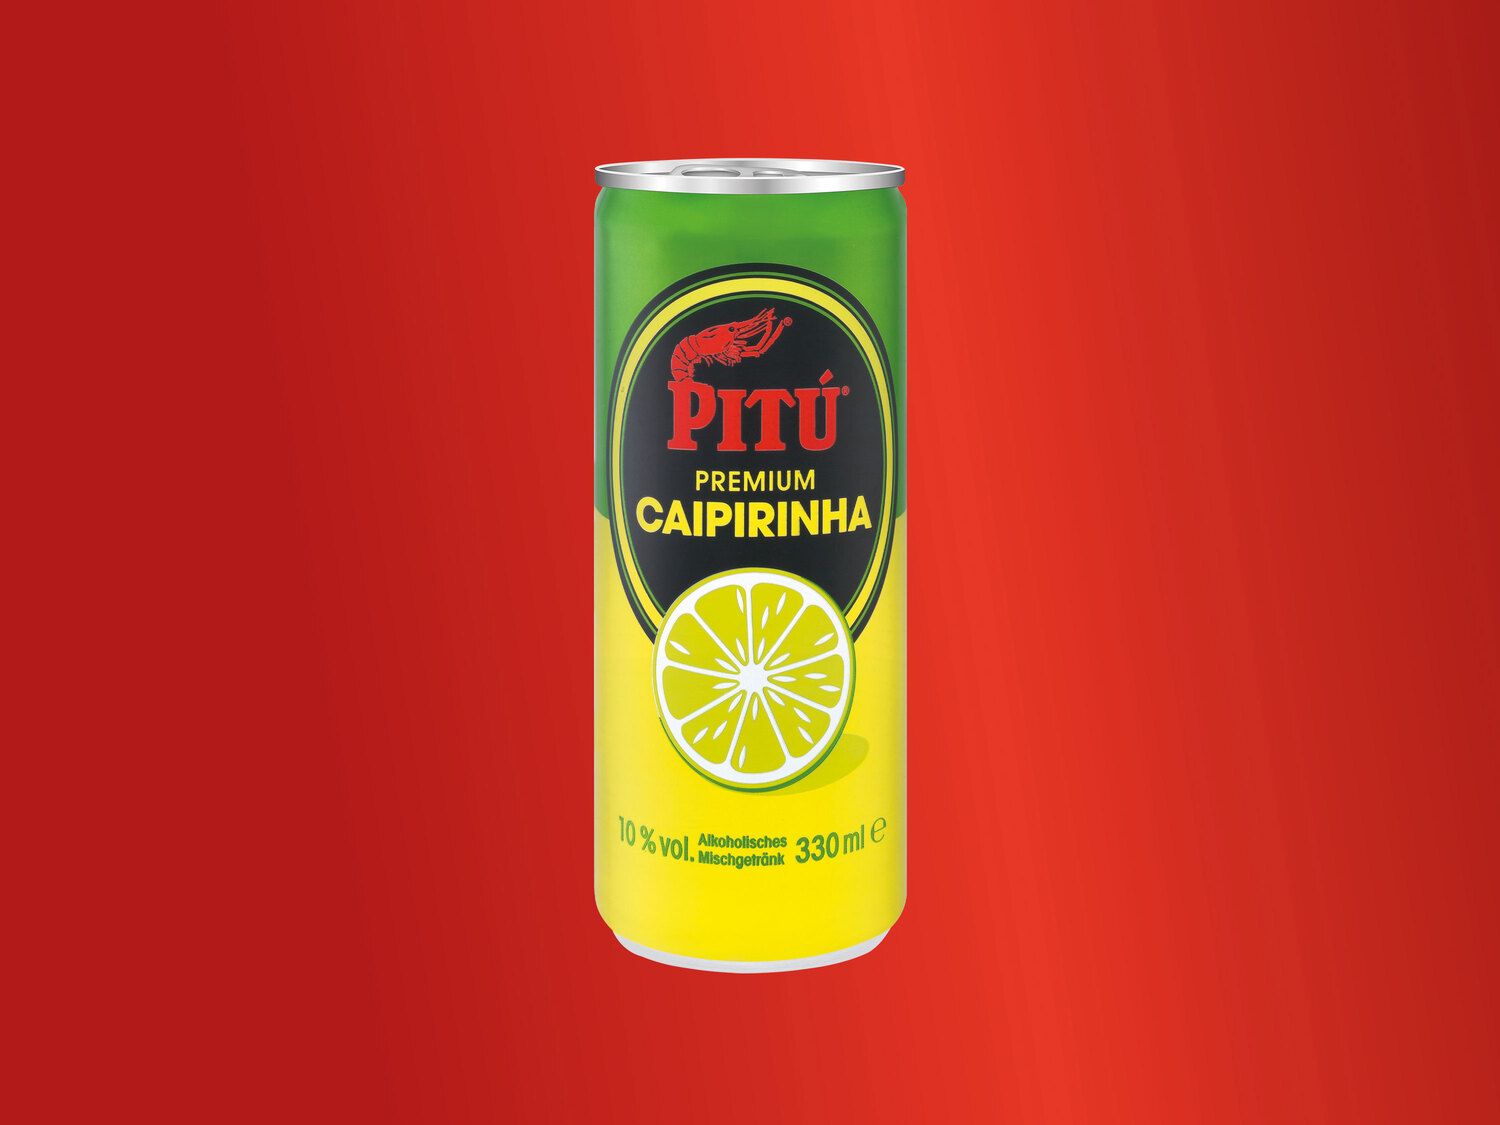 Premium - Caipirinha Pitú Lidl Deutschland